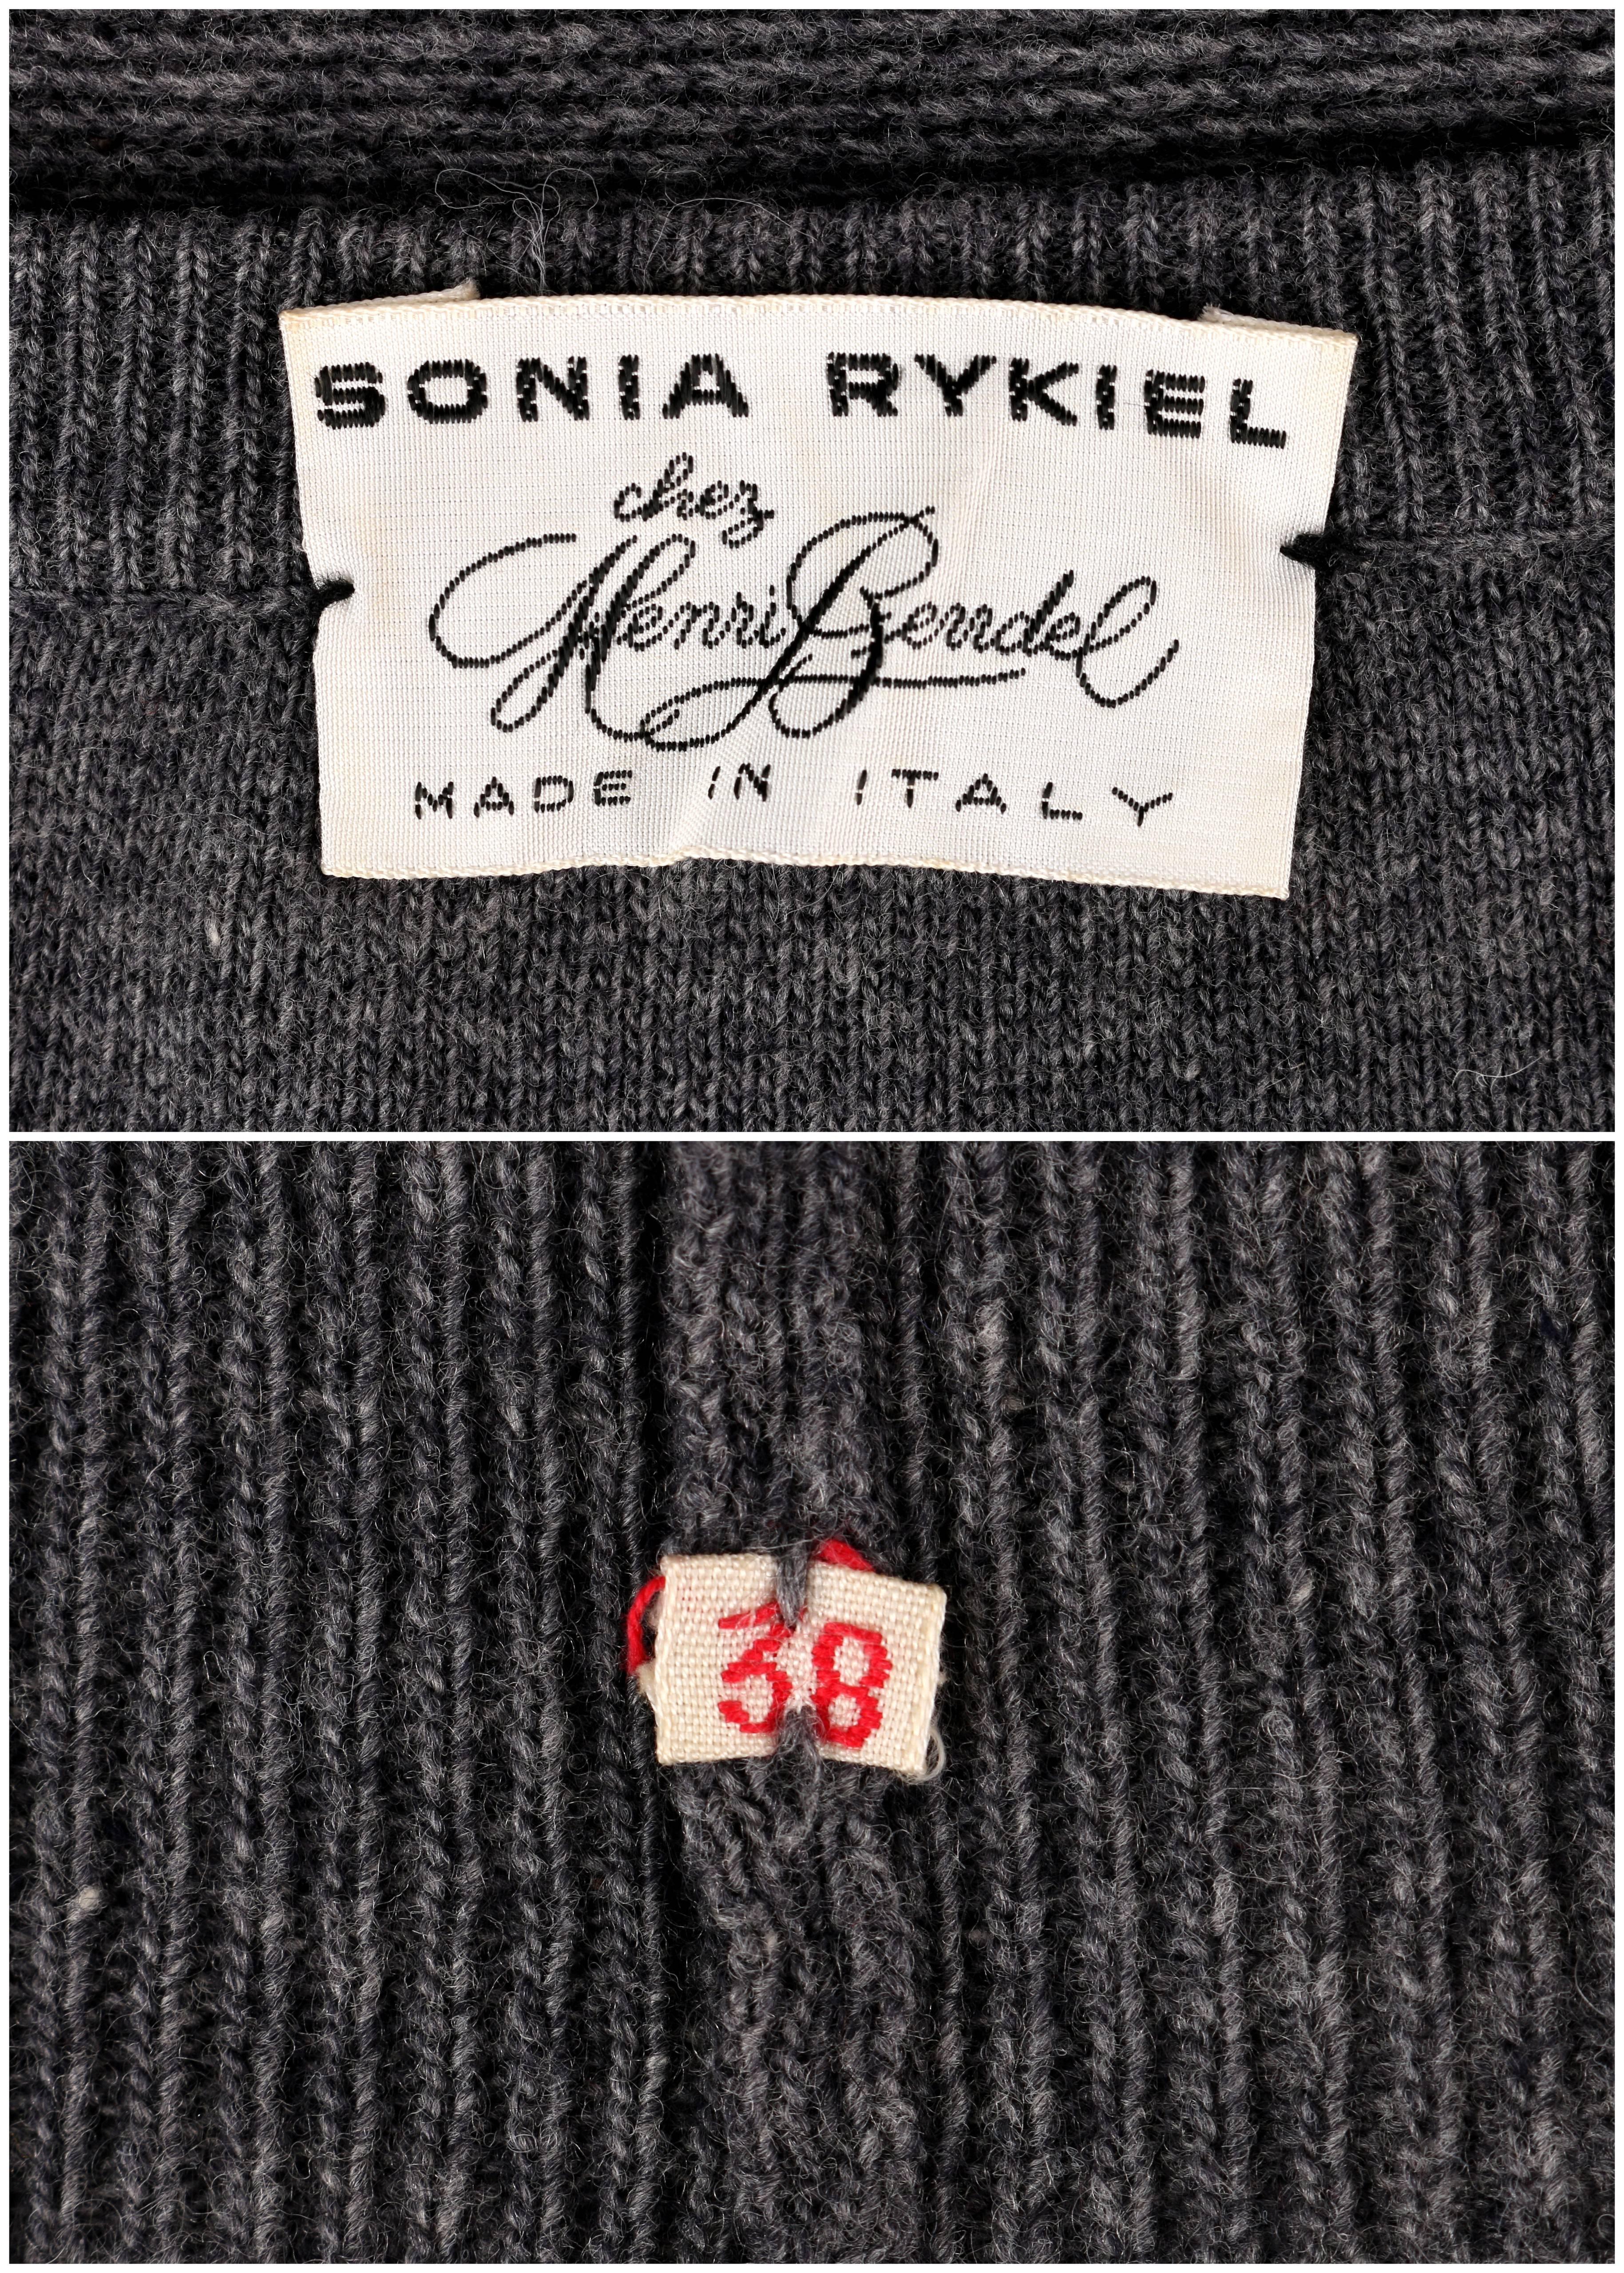 SONIA RYKIEL Chez Henri Bendel c.1960's Gray Wool Knit Scarf Pullover Sweater 4